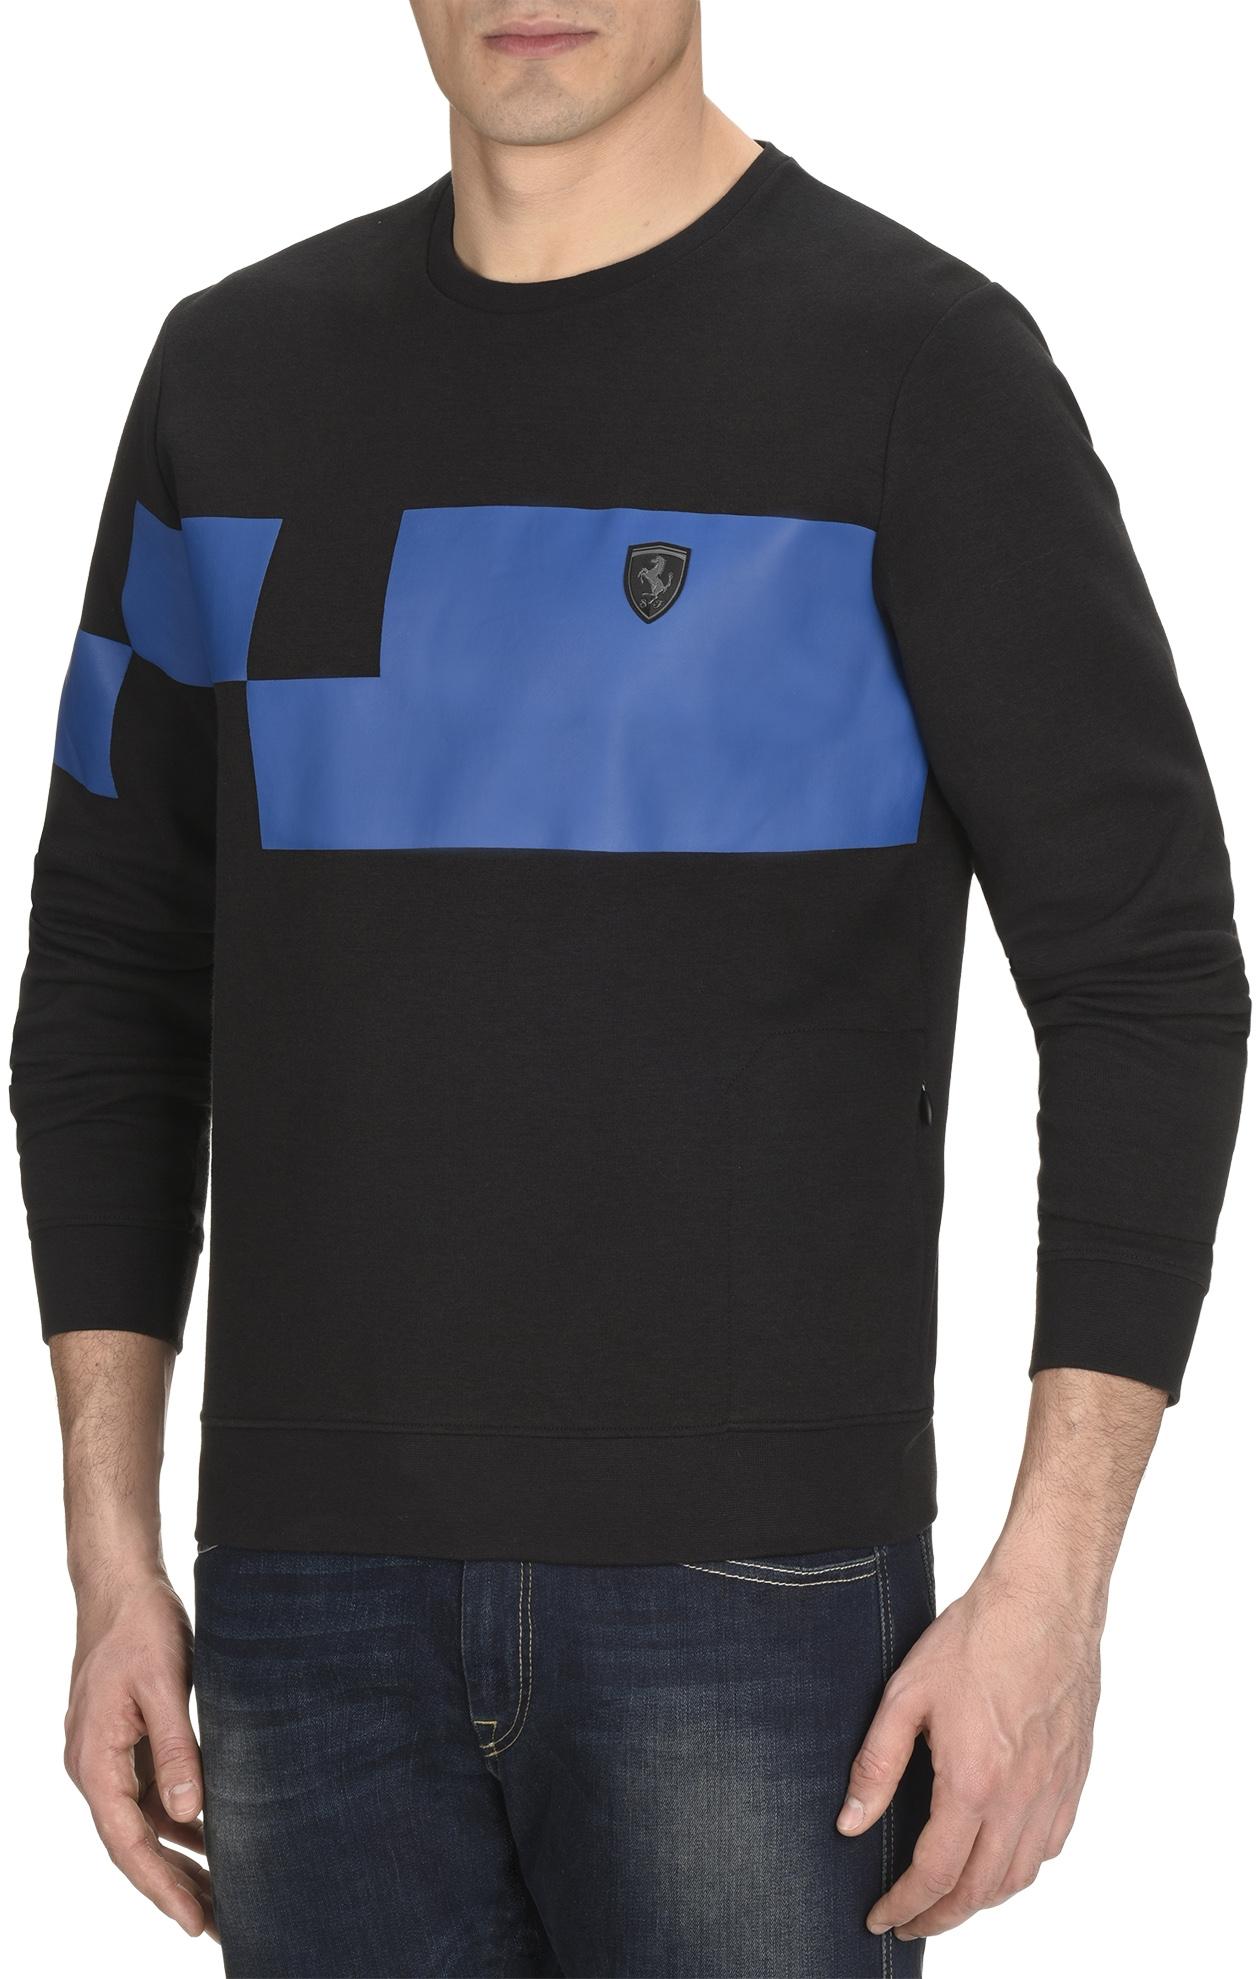 Chequered Stripe Sweater